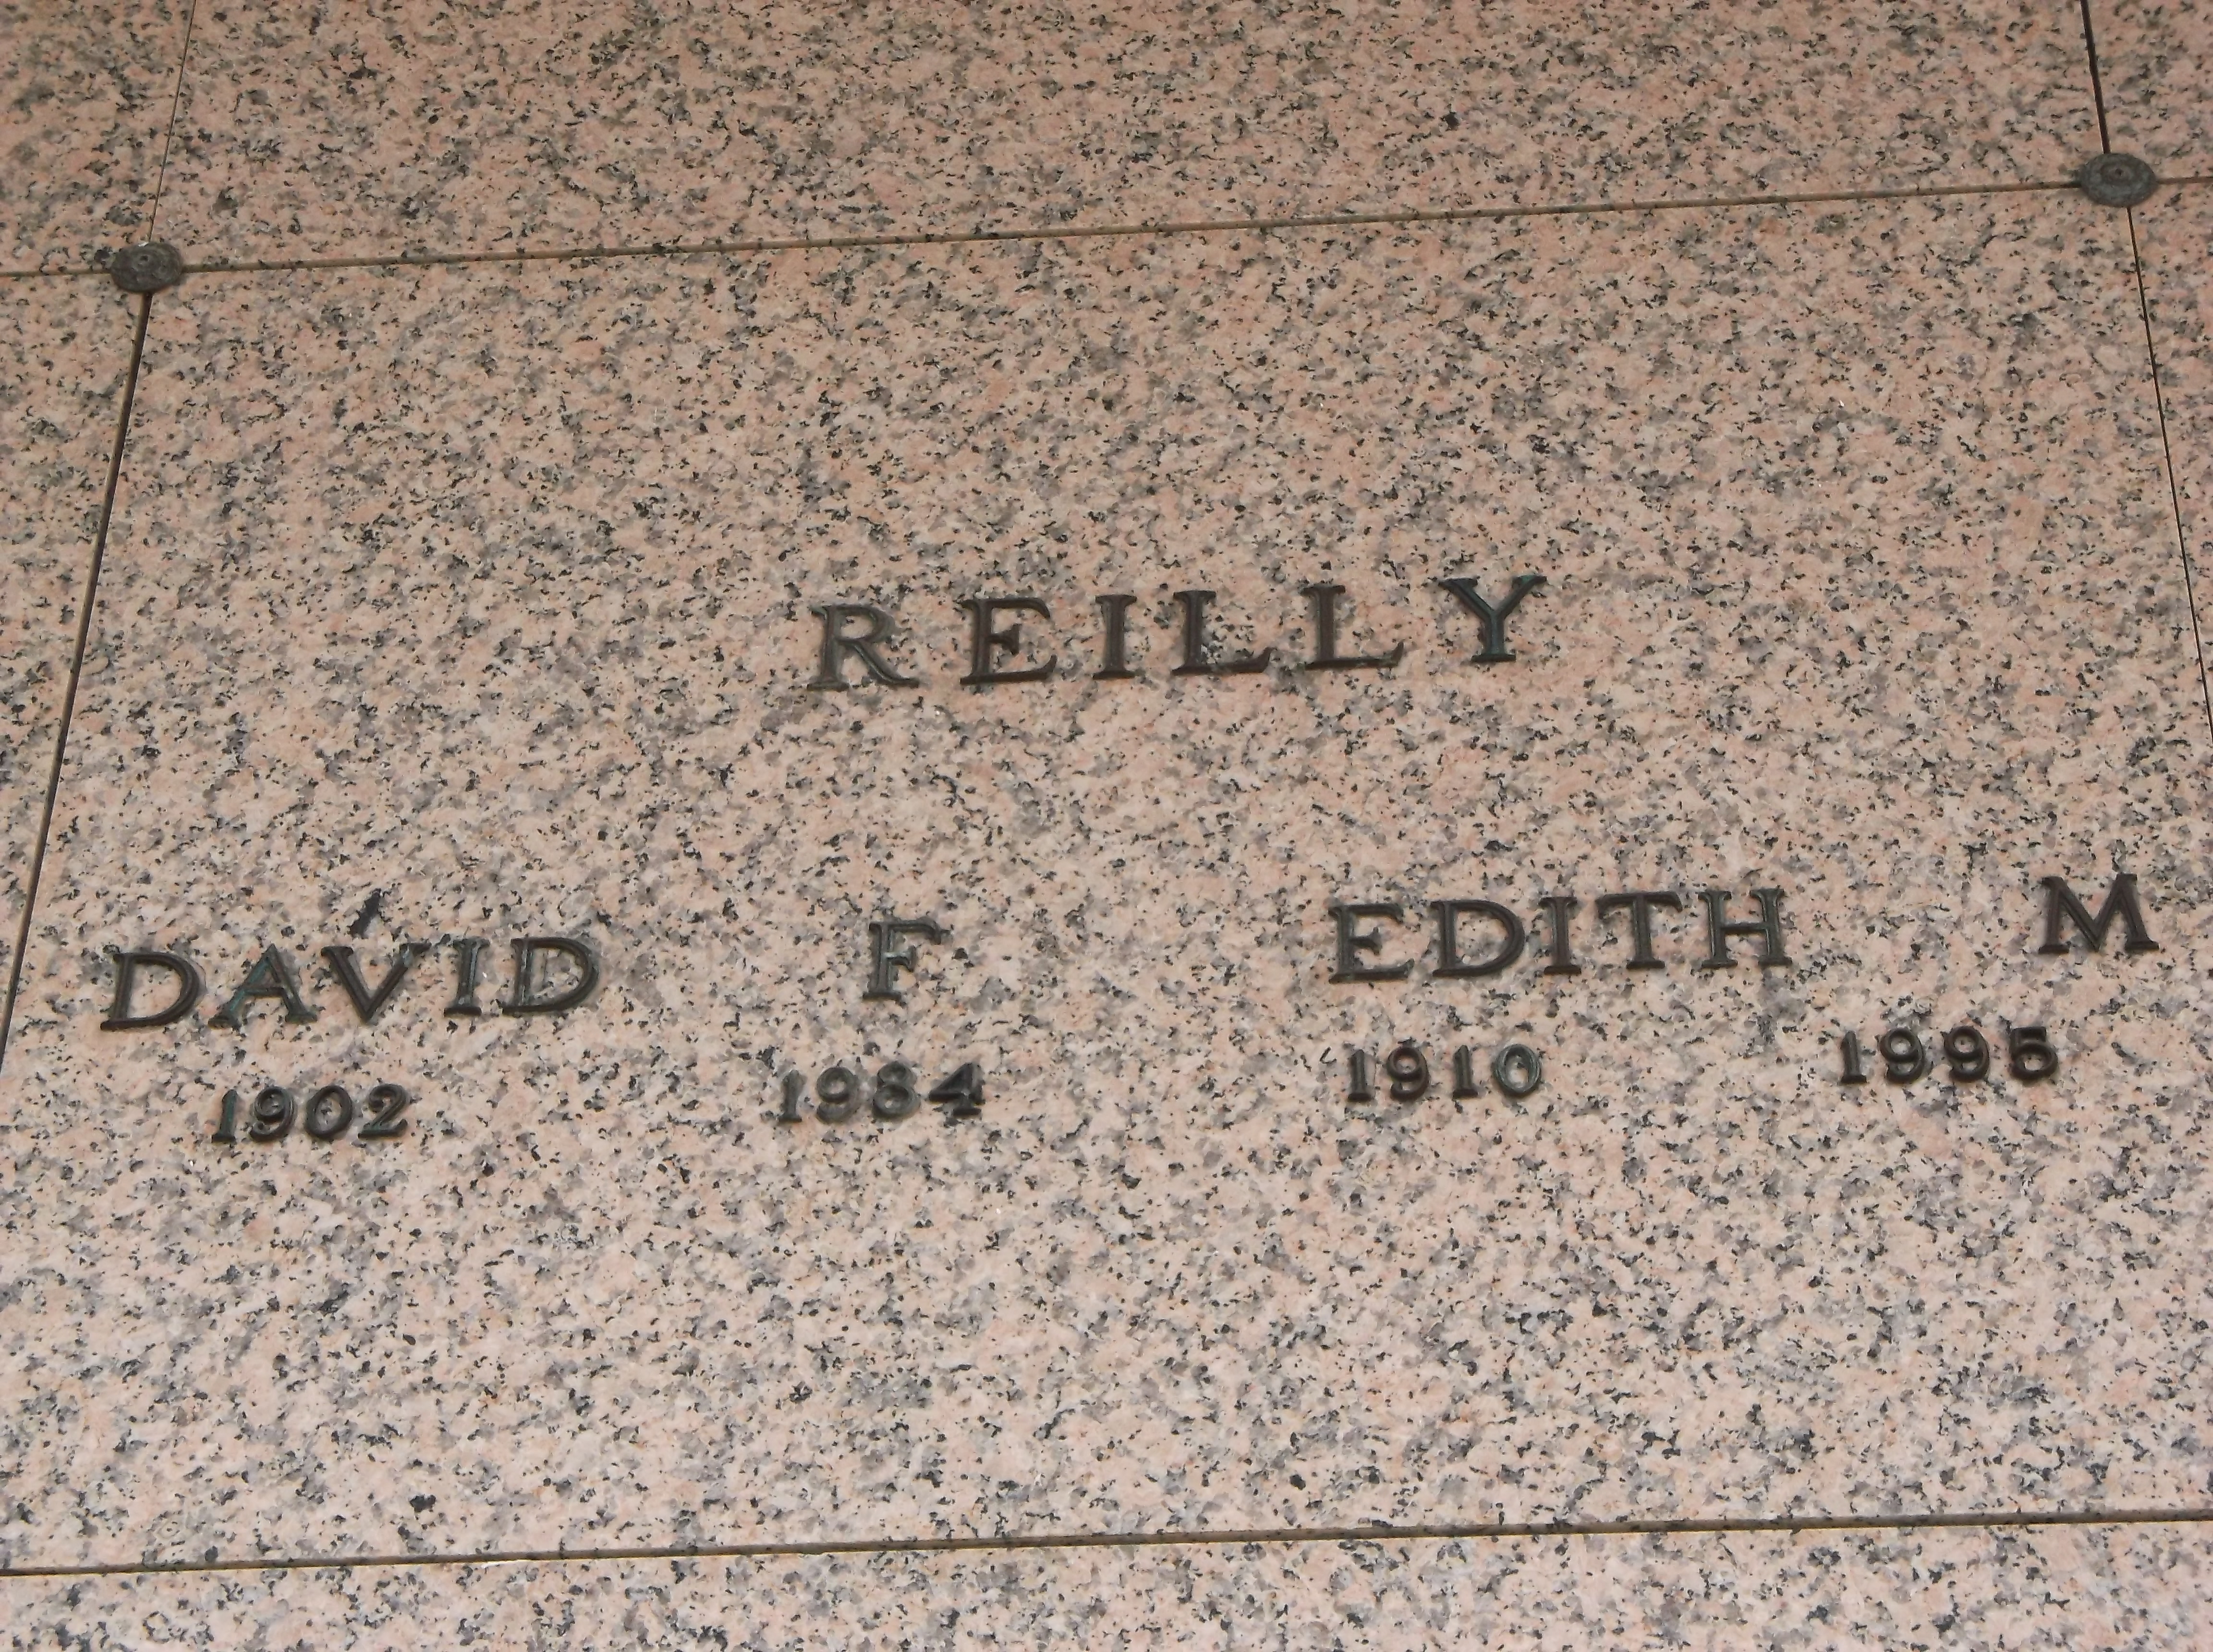 Edith M Reilly